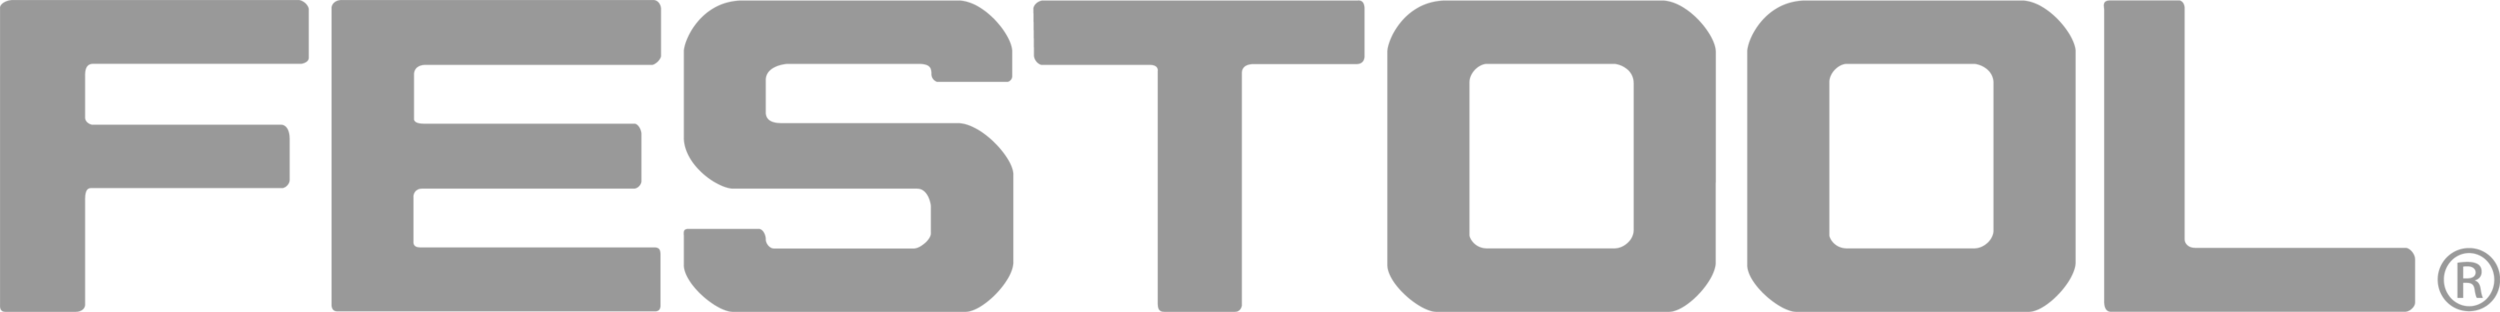 Festool-grey-logo.png